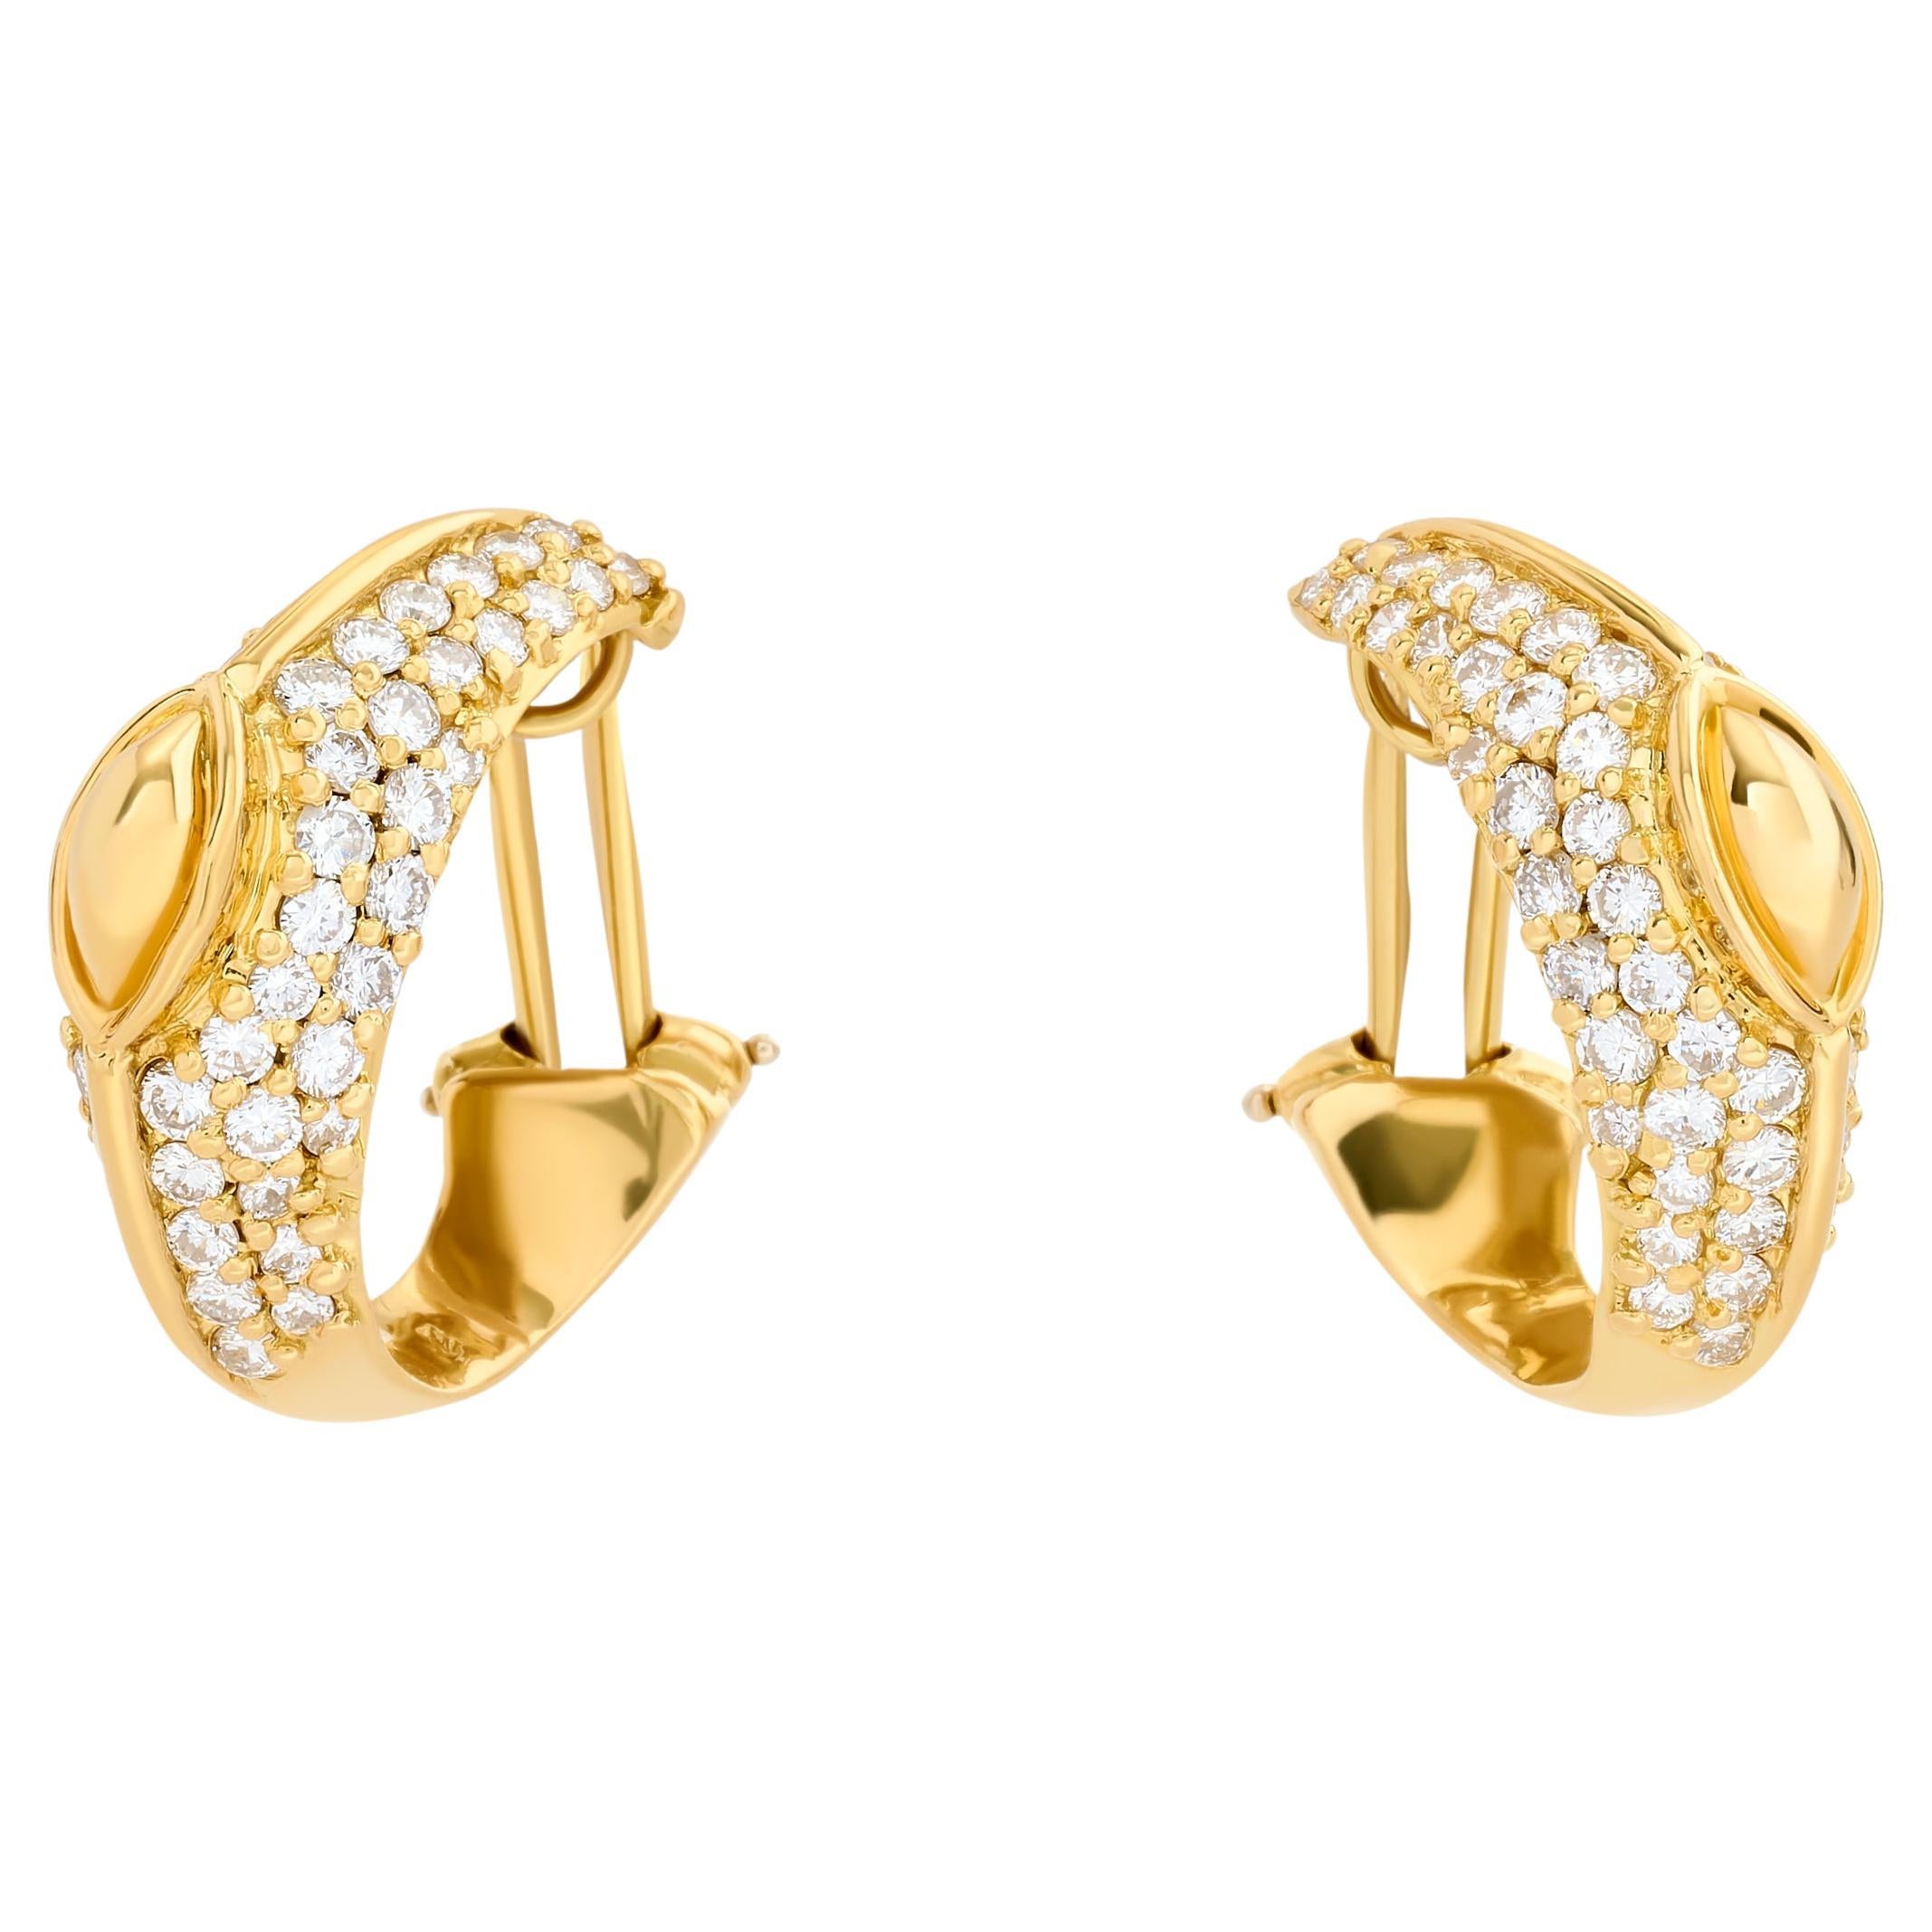 Hammerman Brothers 18K Yellow Gold Diamond Earrings For Sale